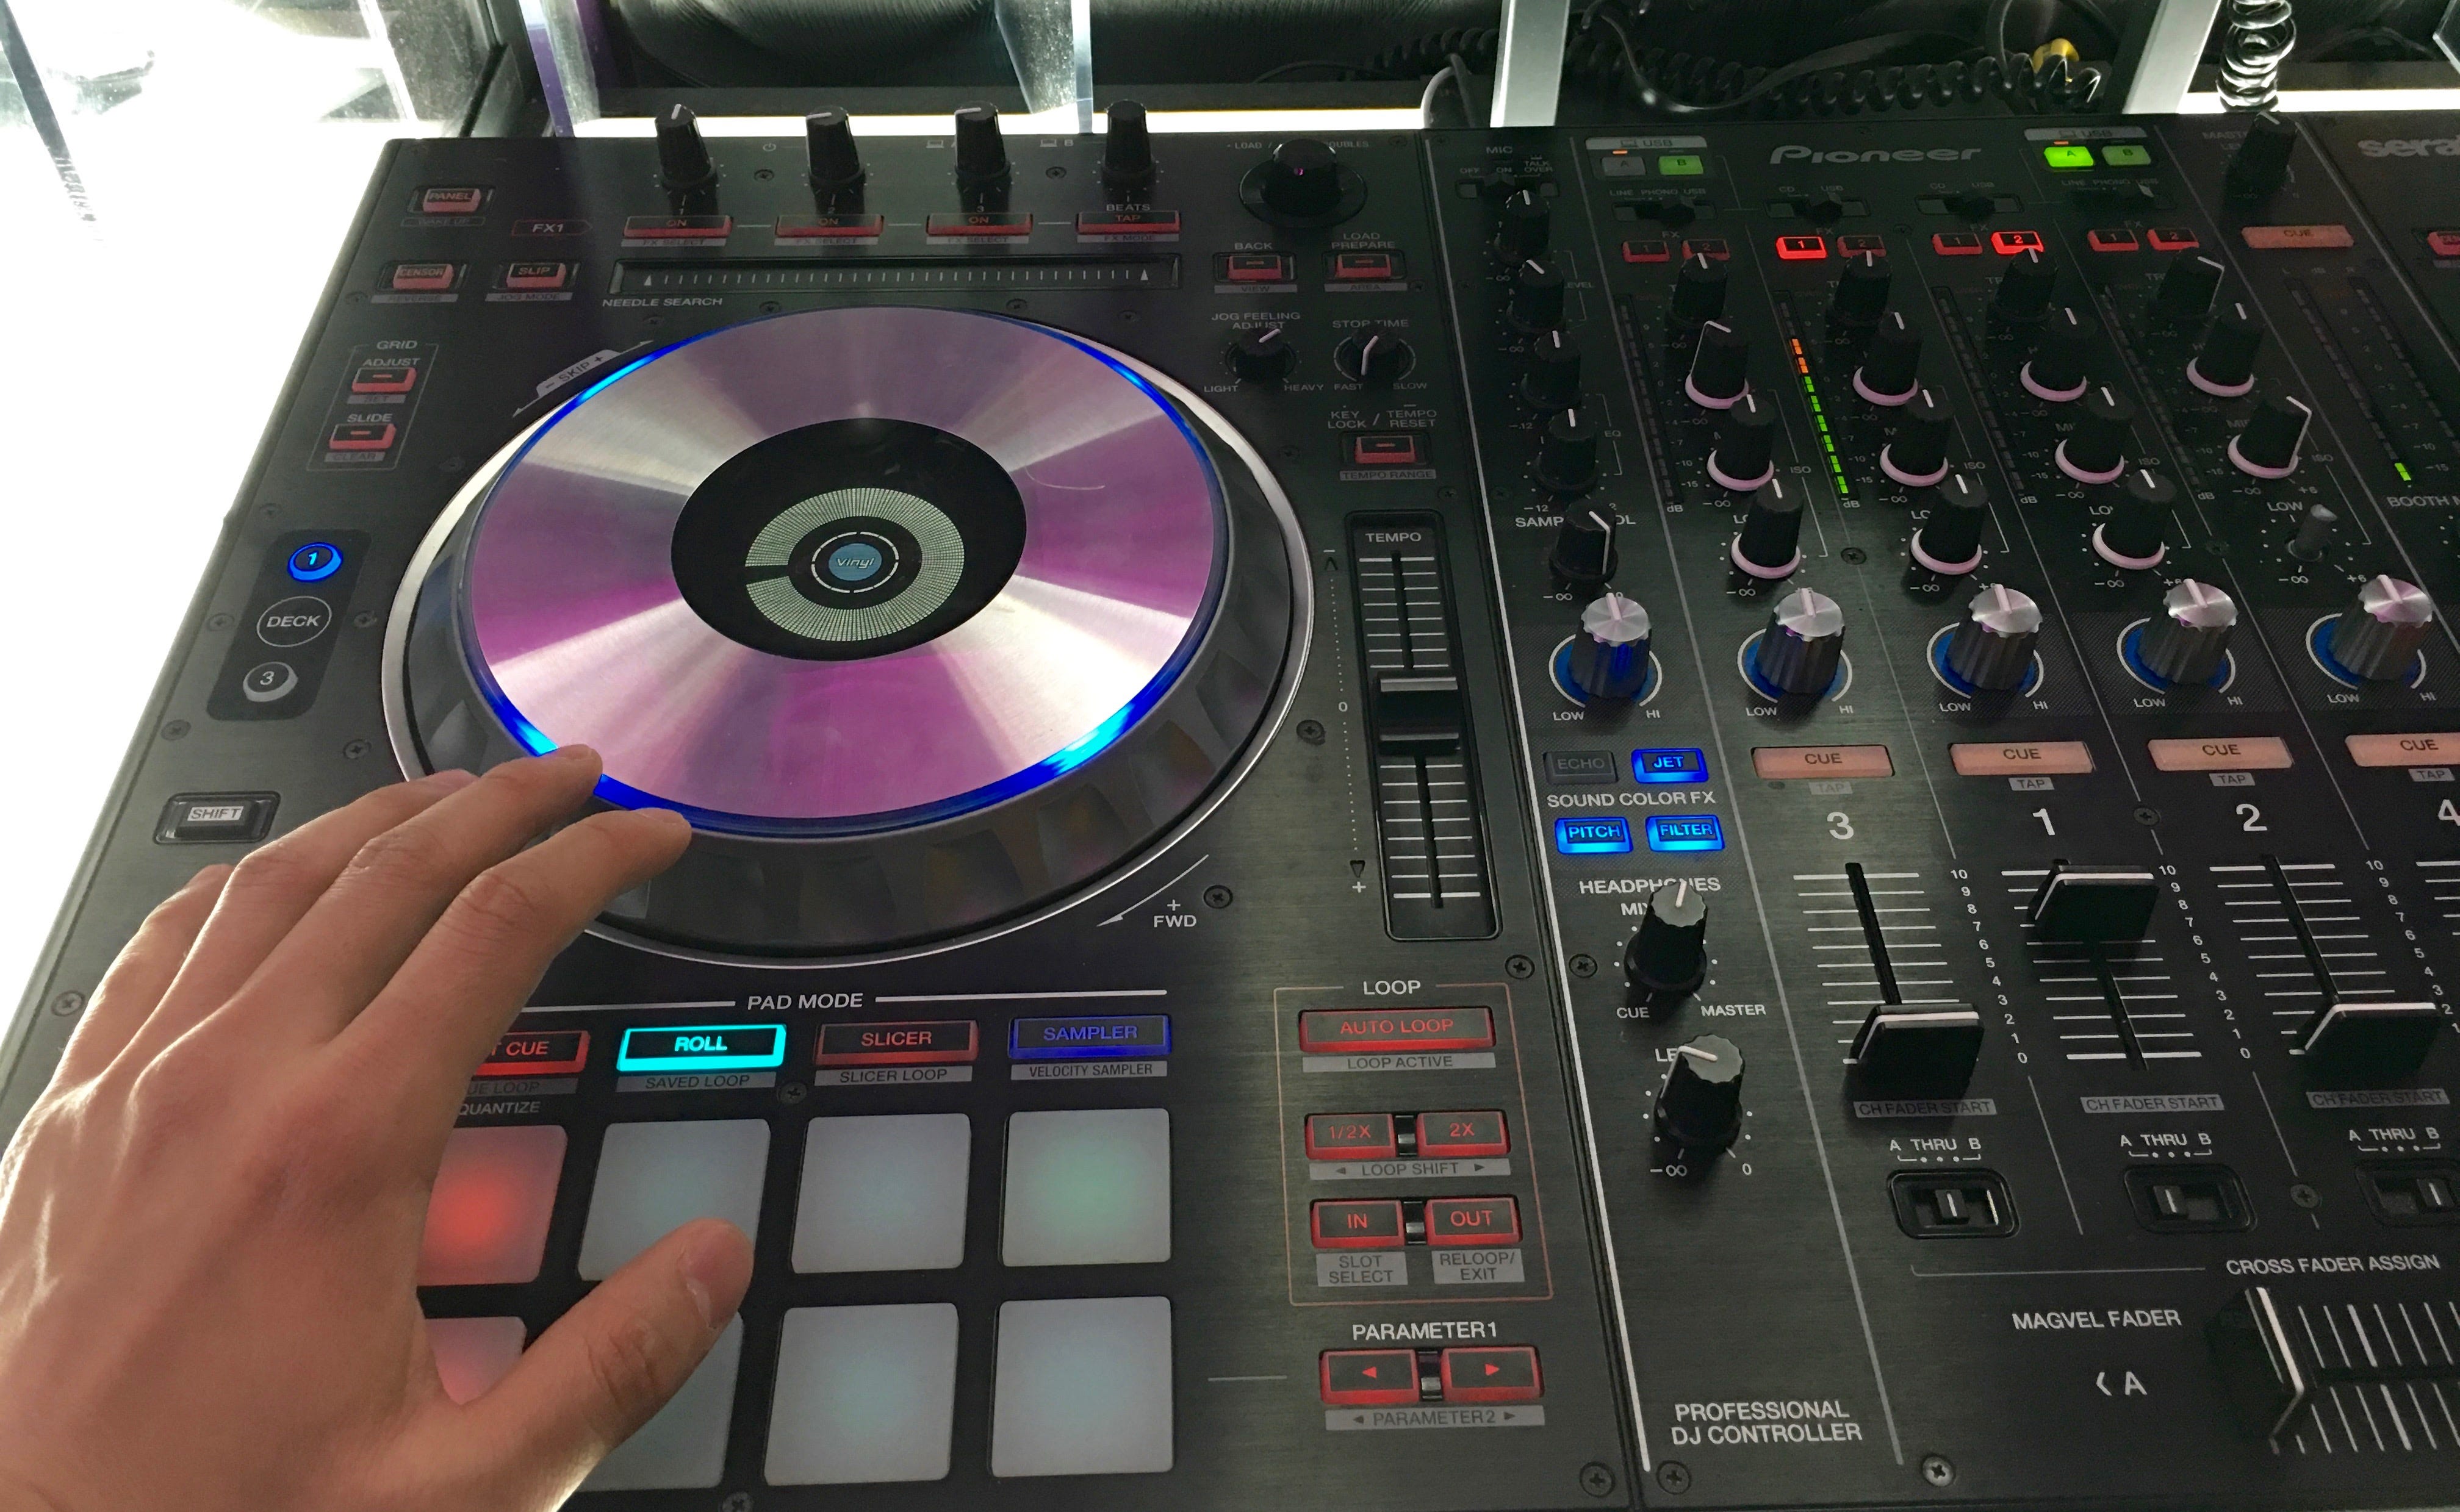 Now You Can DJ From Spotify With The Pioneer DJ DDJ-400 - Digital DJ Tips